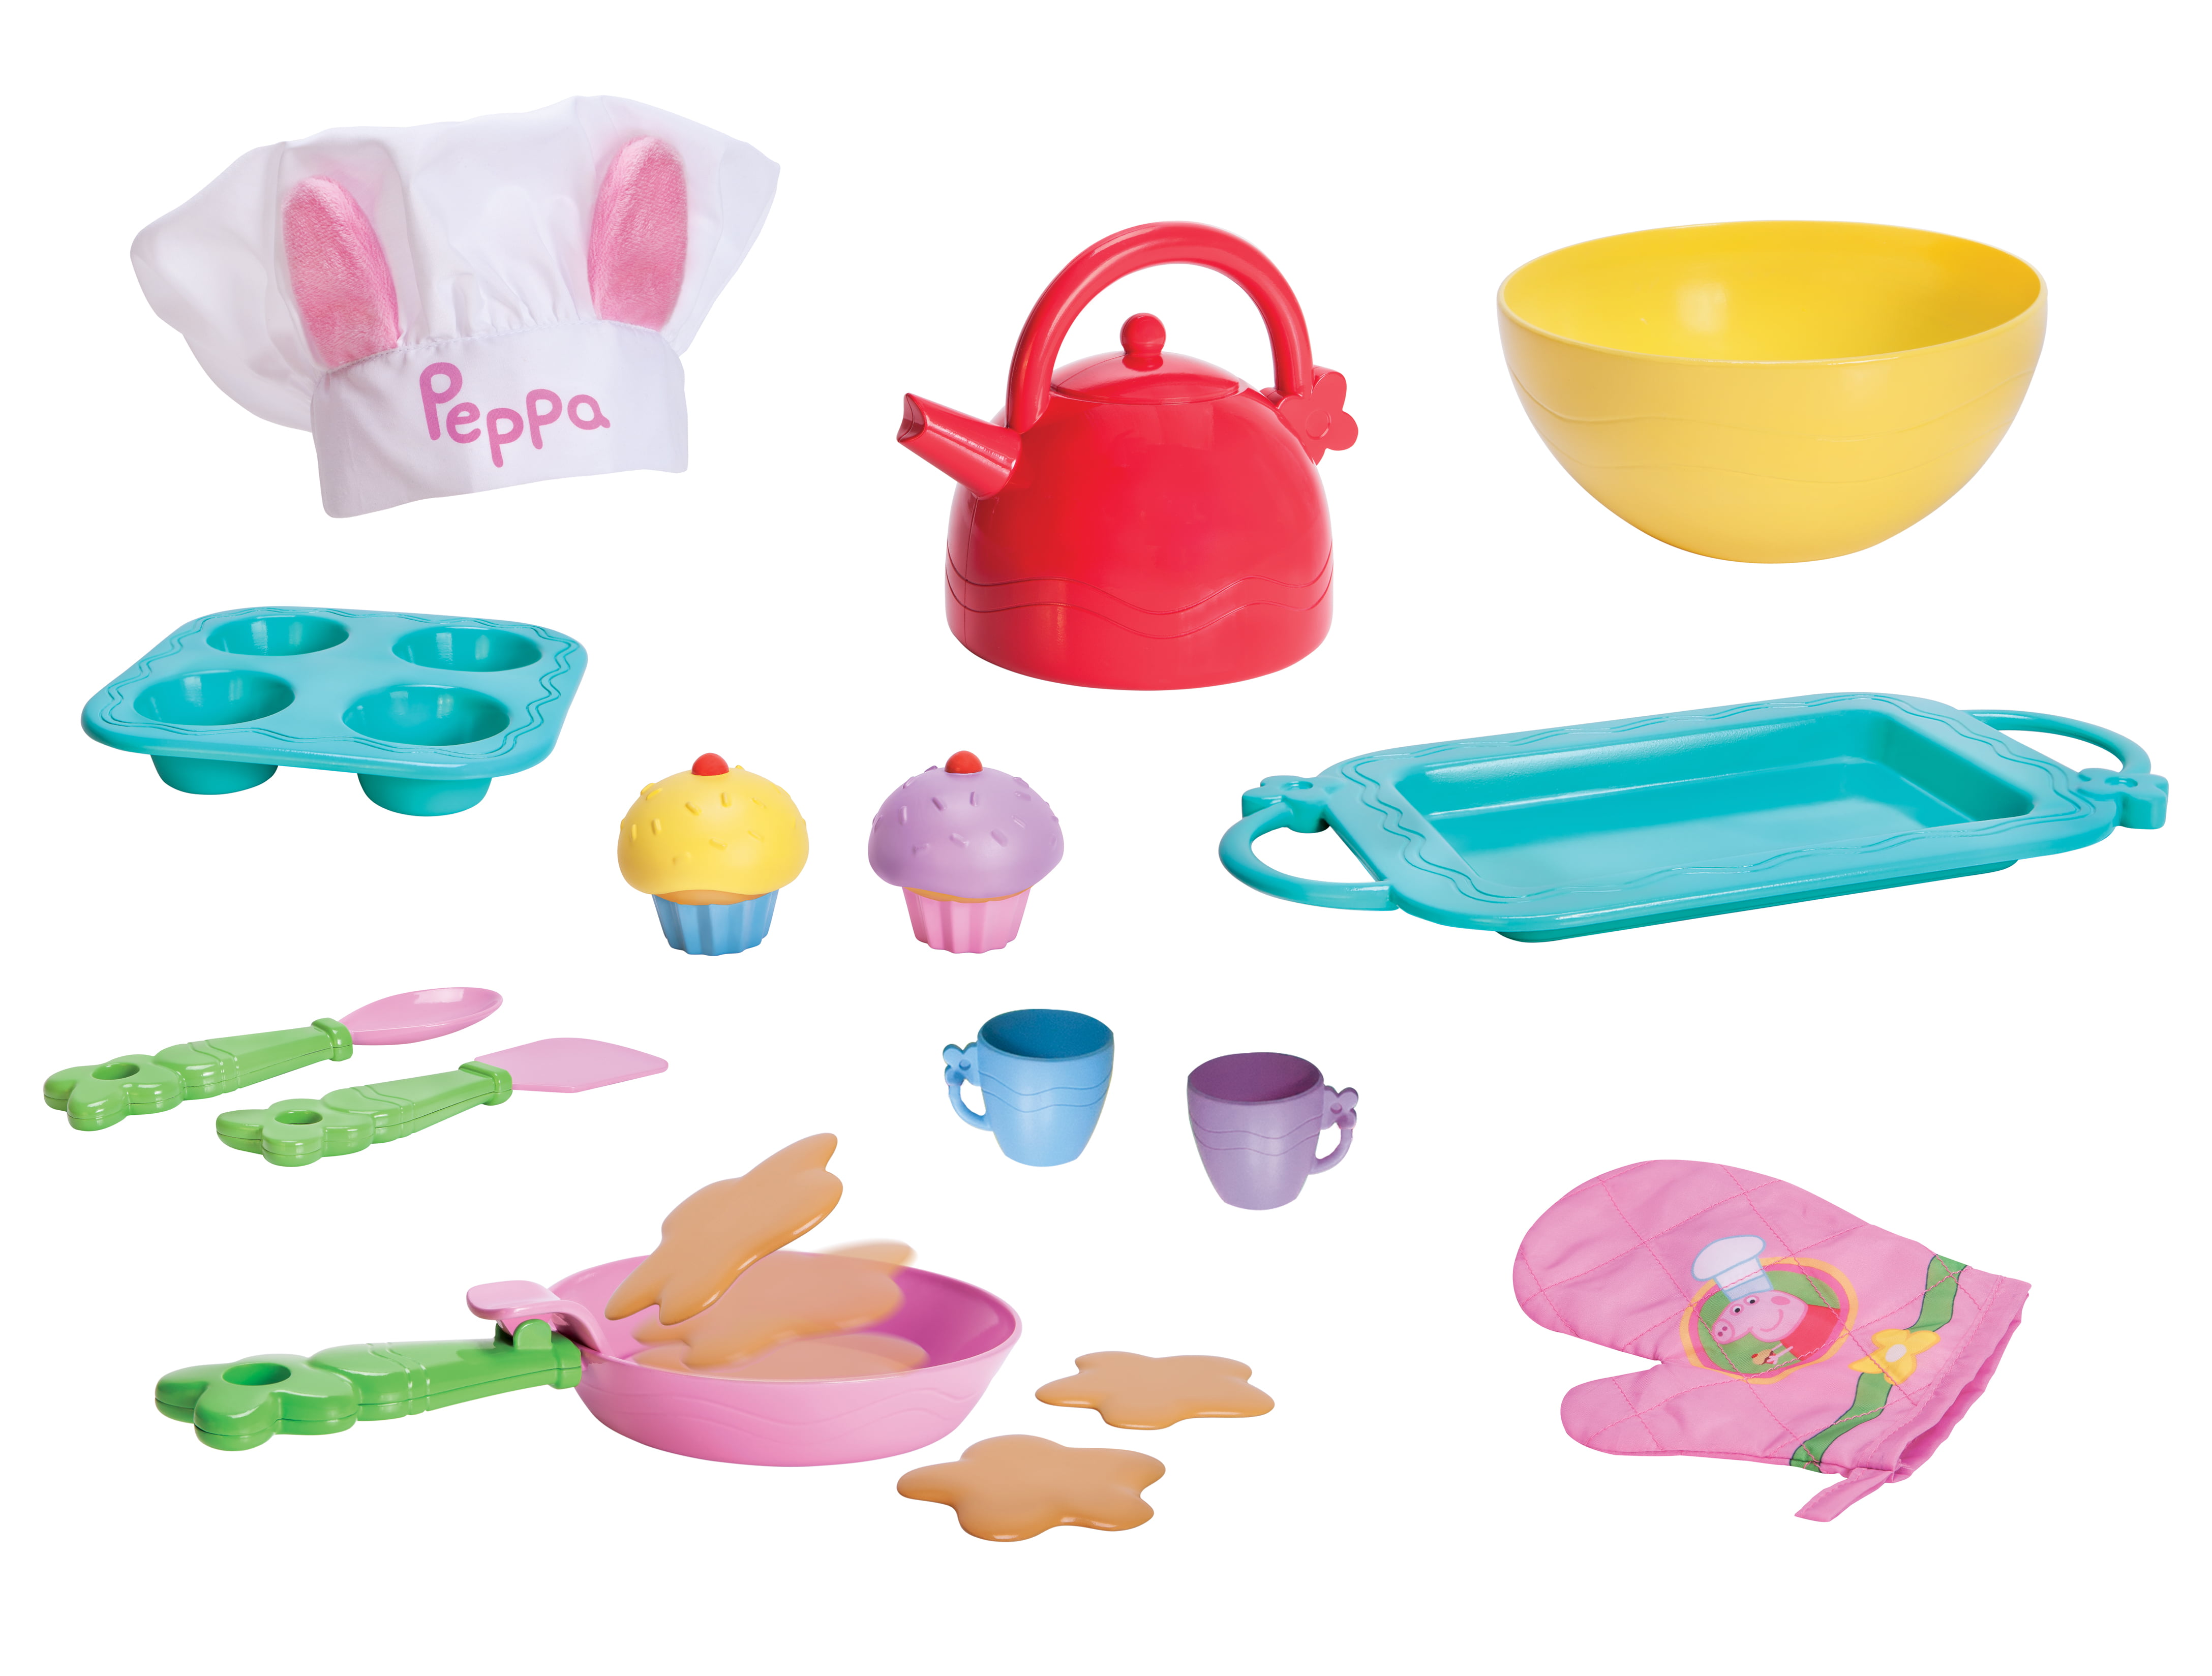 peppa pig kitchen toys